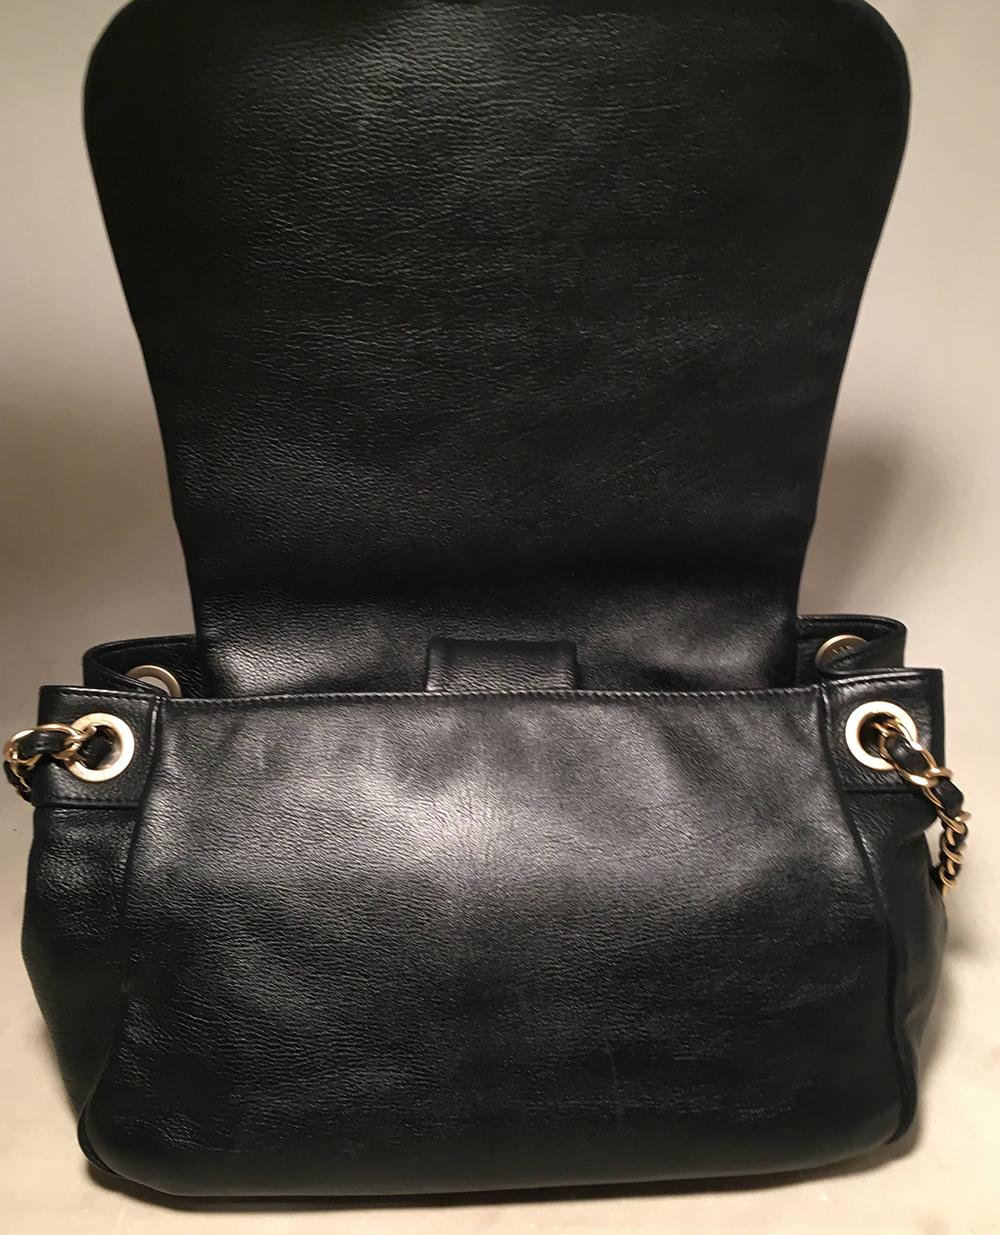 Chanel Black Leather Mosaic Studded Accordion Classic Flap Shoulder Bag 2